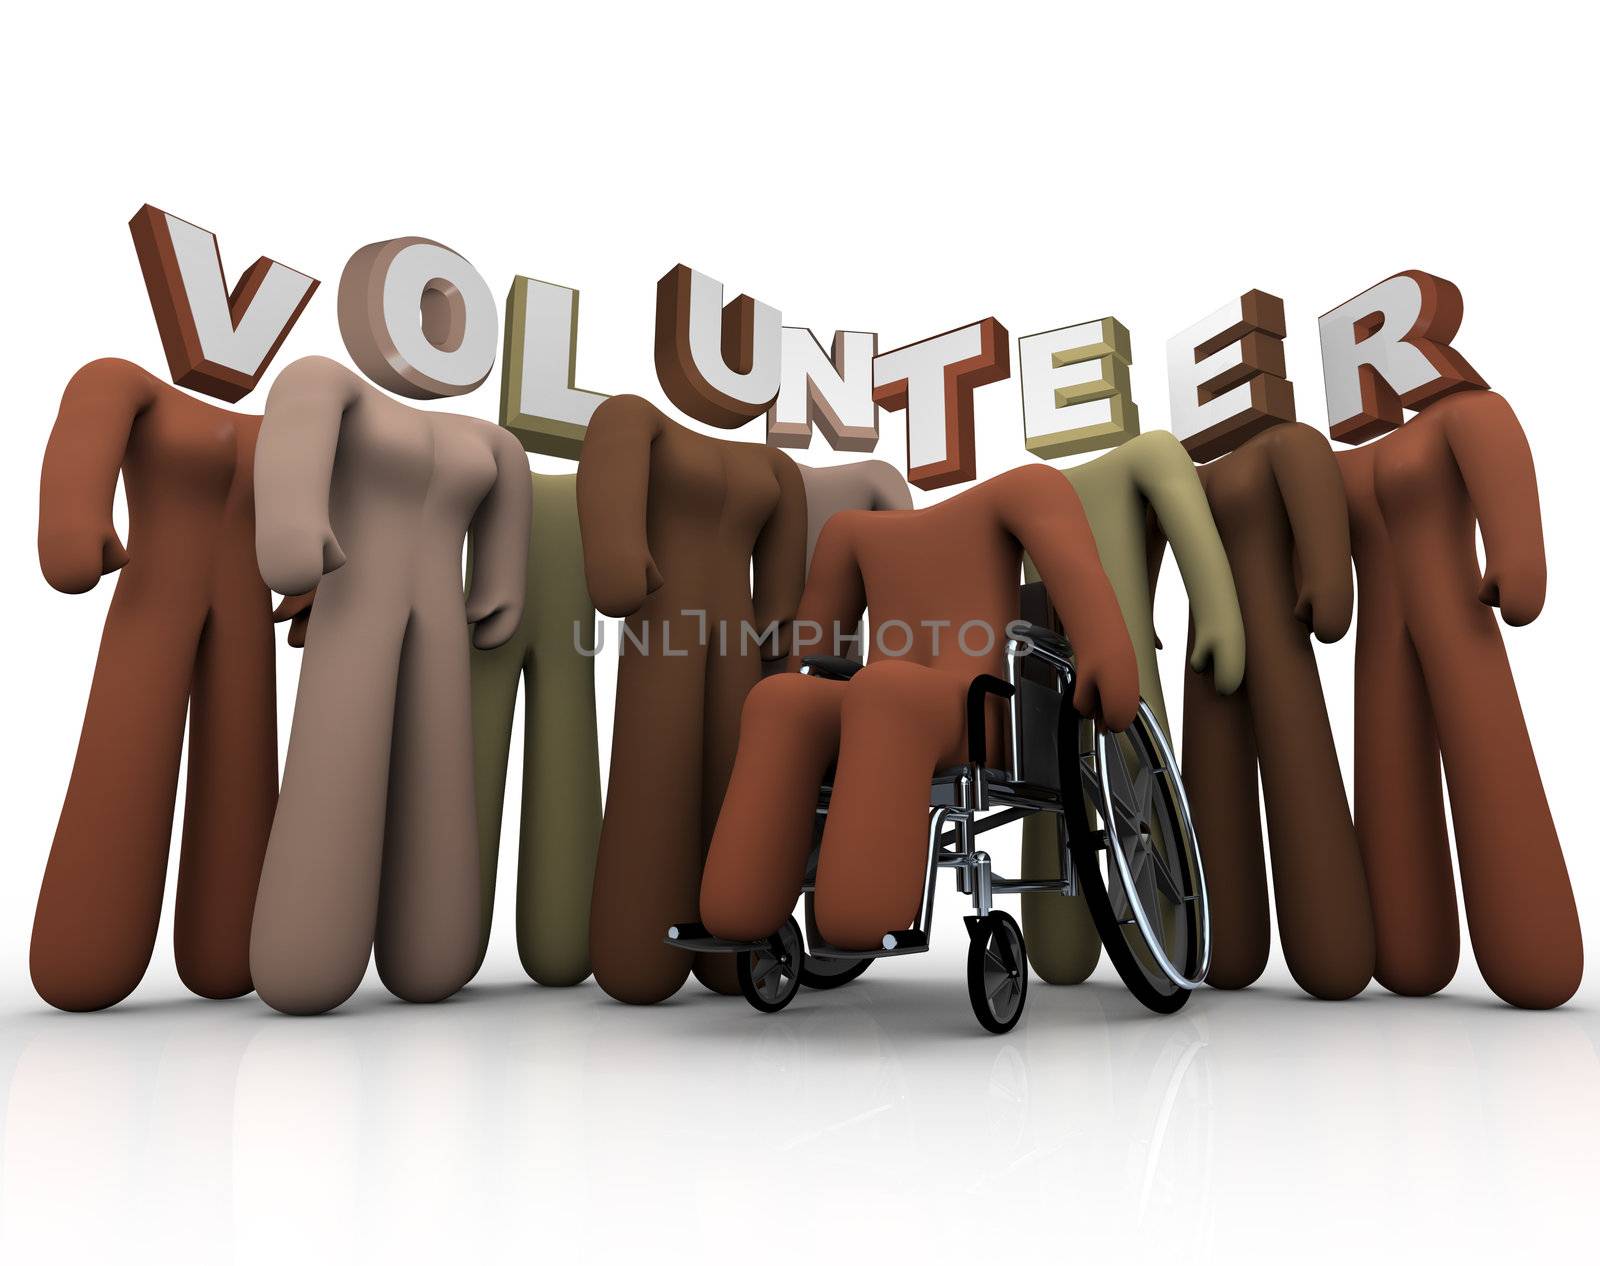 Volunteers - Diverse People Volunteer Time for Worthy Causes by iQoncept